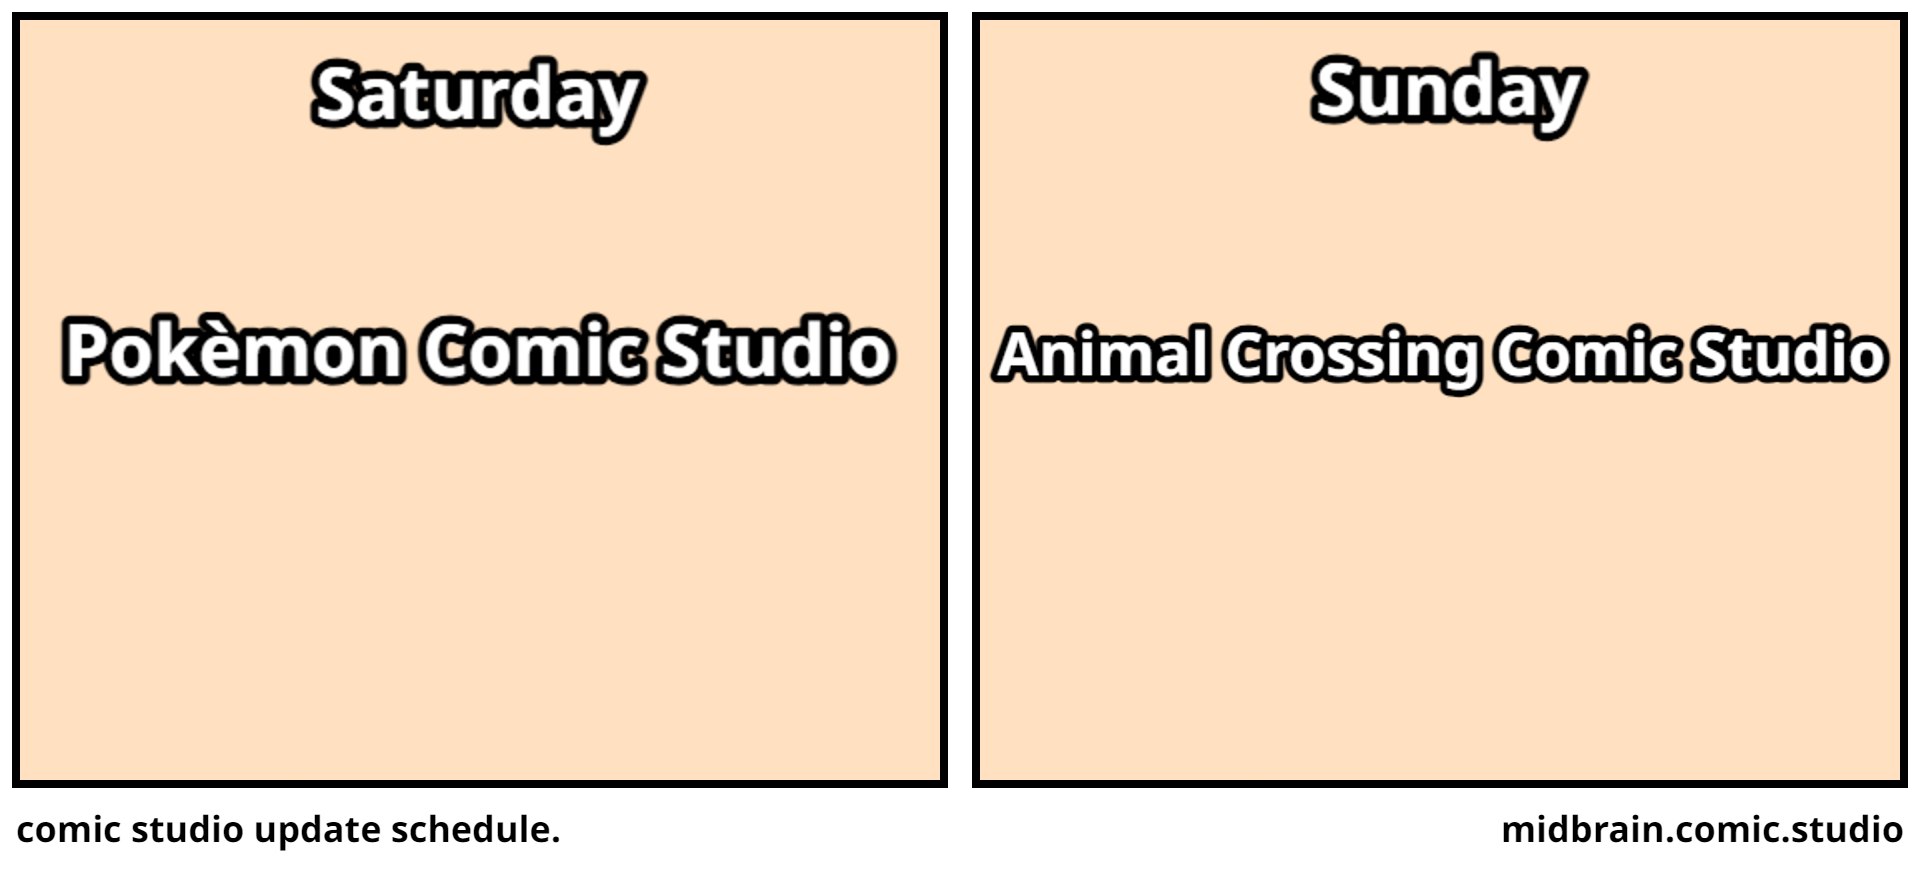 comic studio update schedule. 